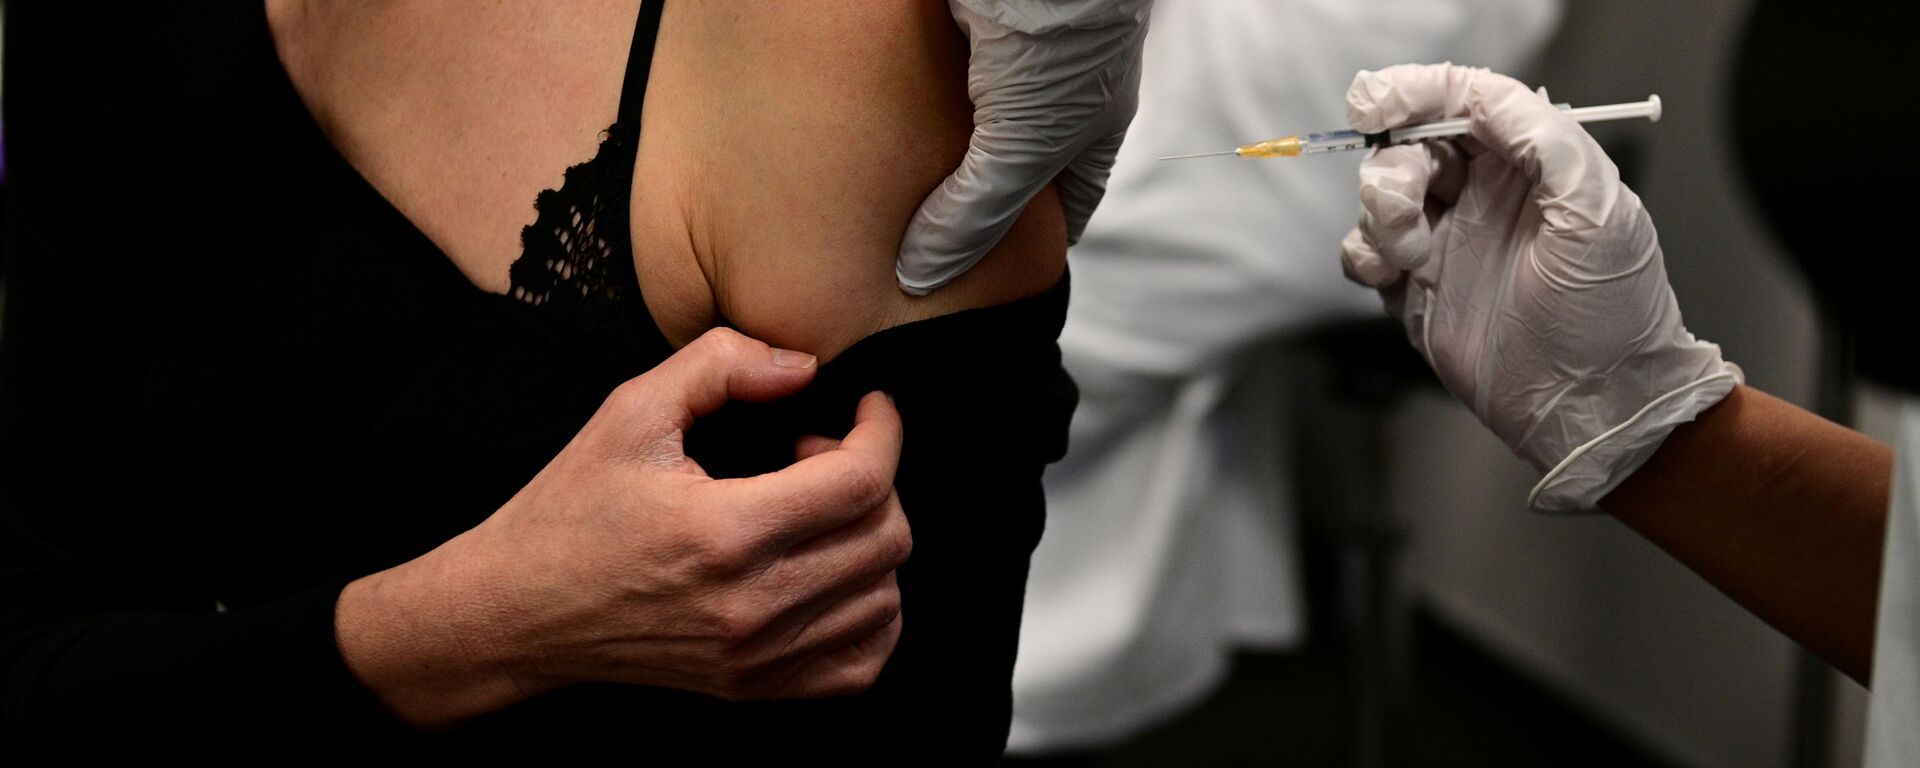 Женщина получает вакцину от COVID-19 во время кампании вакцинации медицинских работников в центре вакцинации в Париже - Sputnik Ўзбекистон, 1920, 29.03.2021